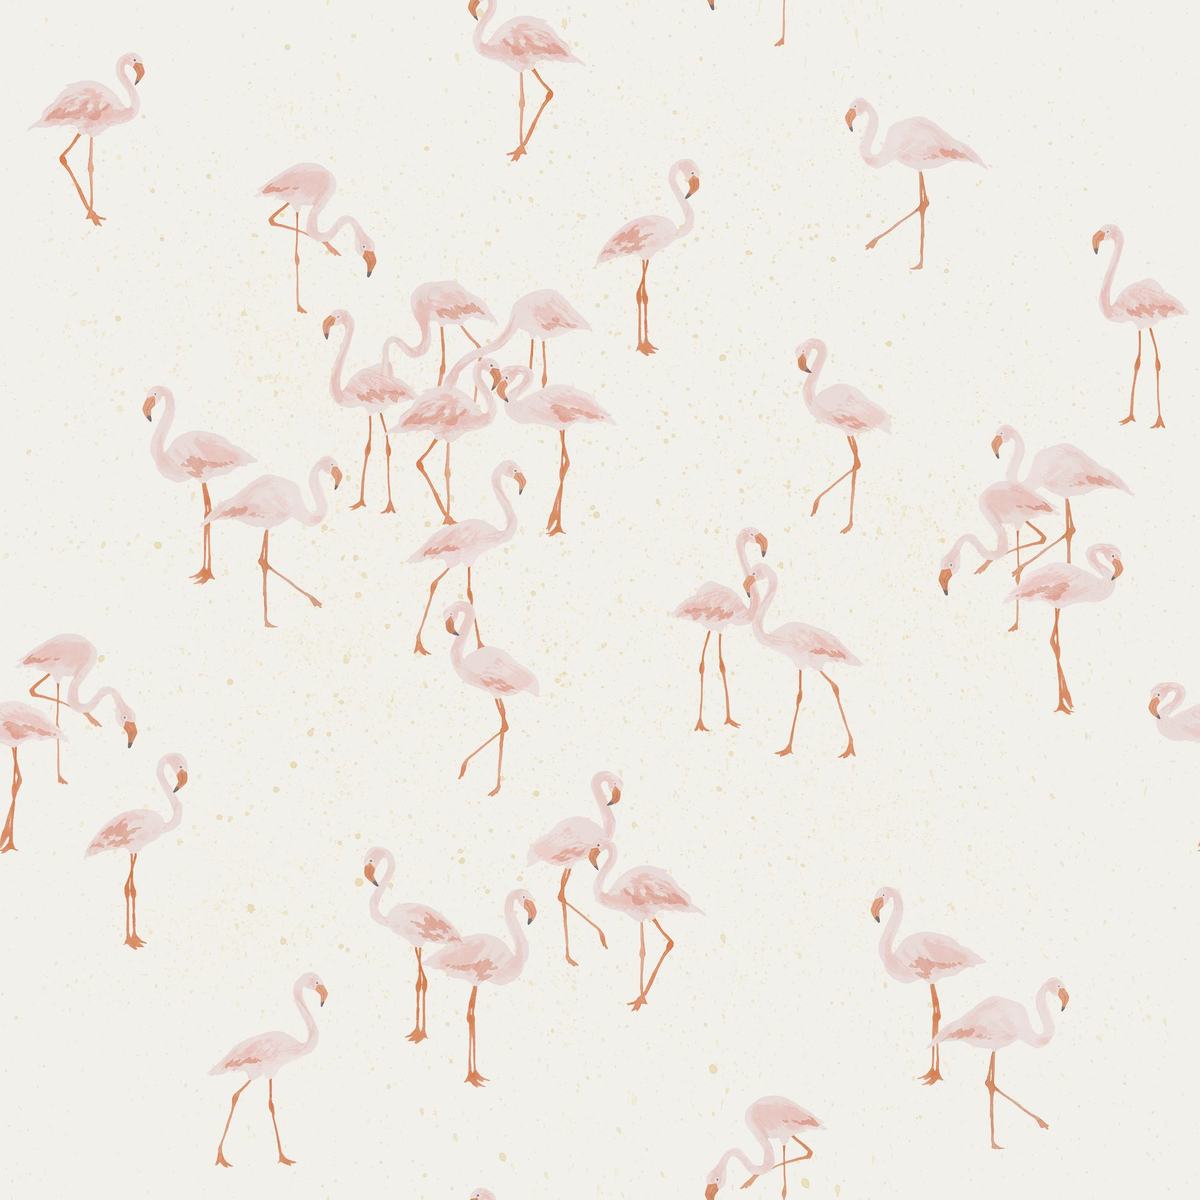 Family Fabrics Stock image of Family Fabrics Flamingo Cotton Jersey Knit - white background with beige splashes and pink flamingos.